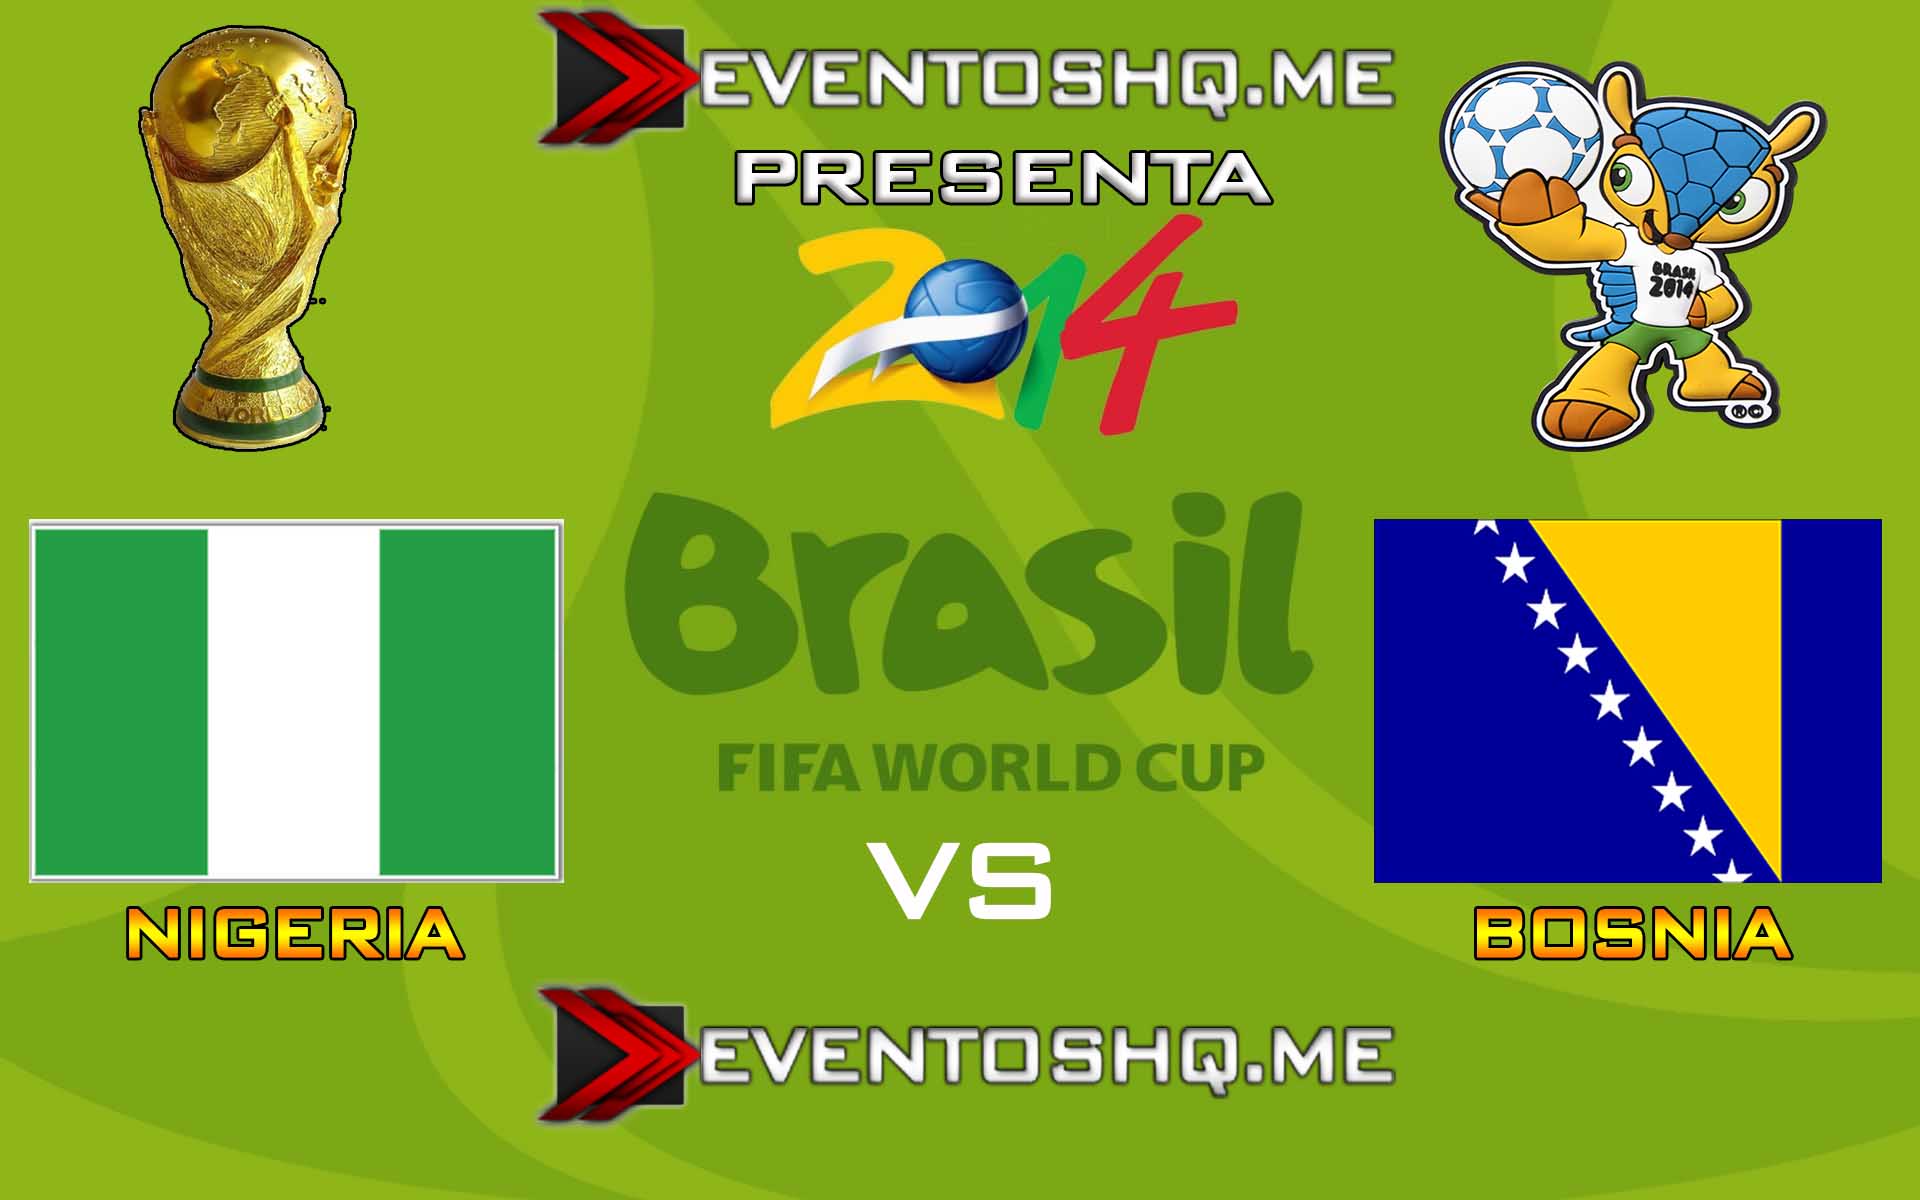 Ver en Vivo Nigeria vs Bosnia Mundial Brasil 2014 www.eventoshq.me